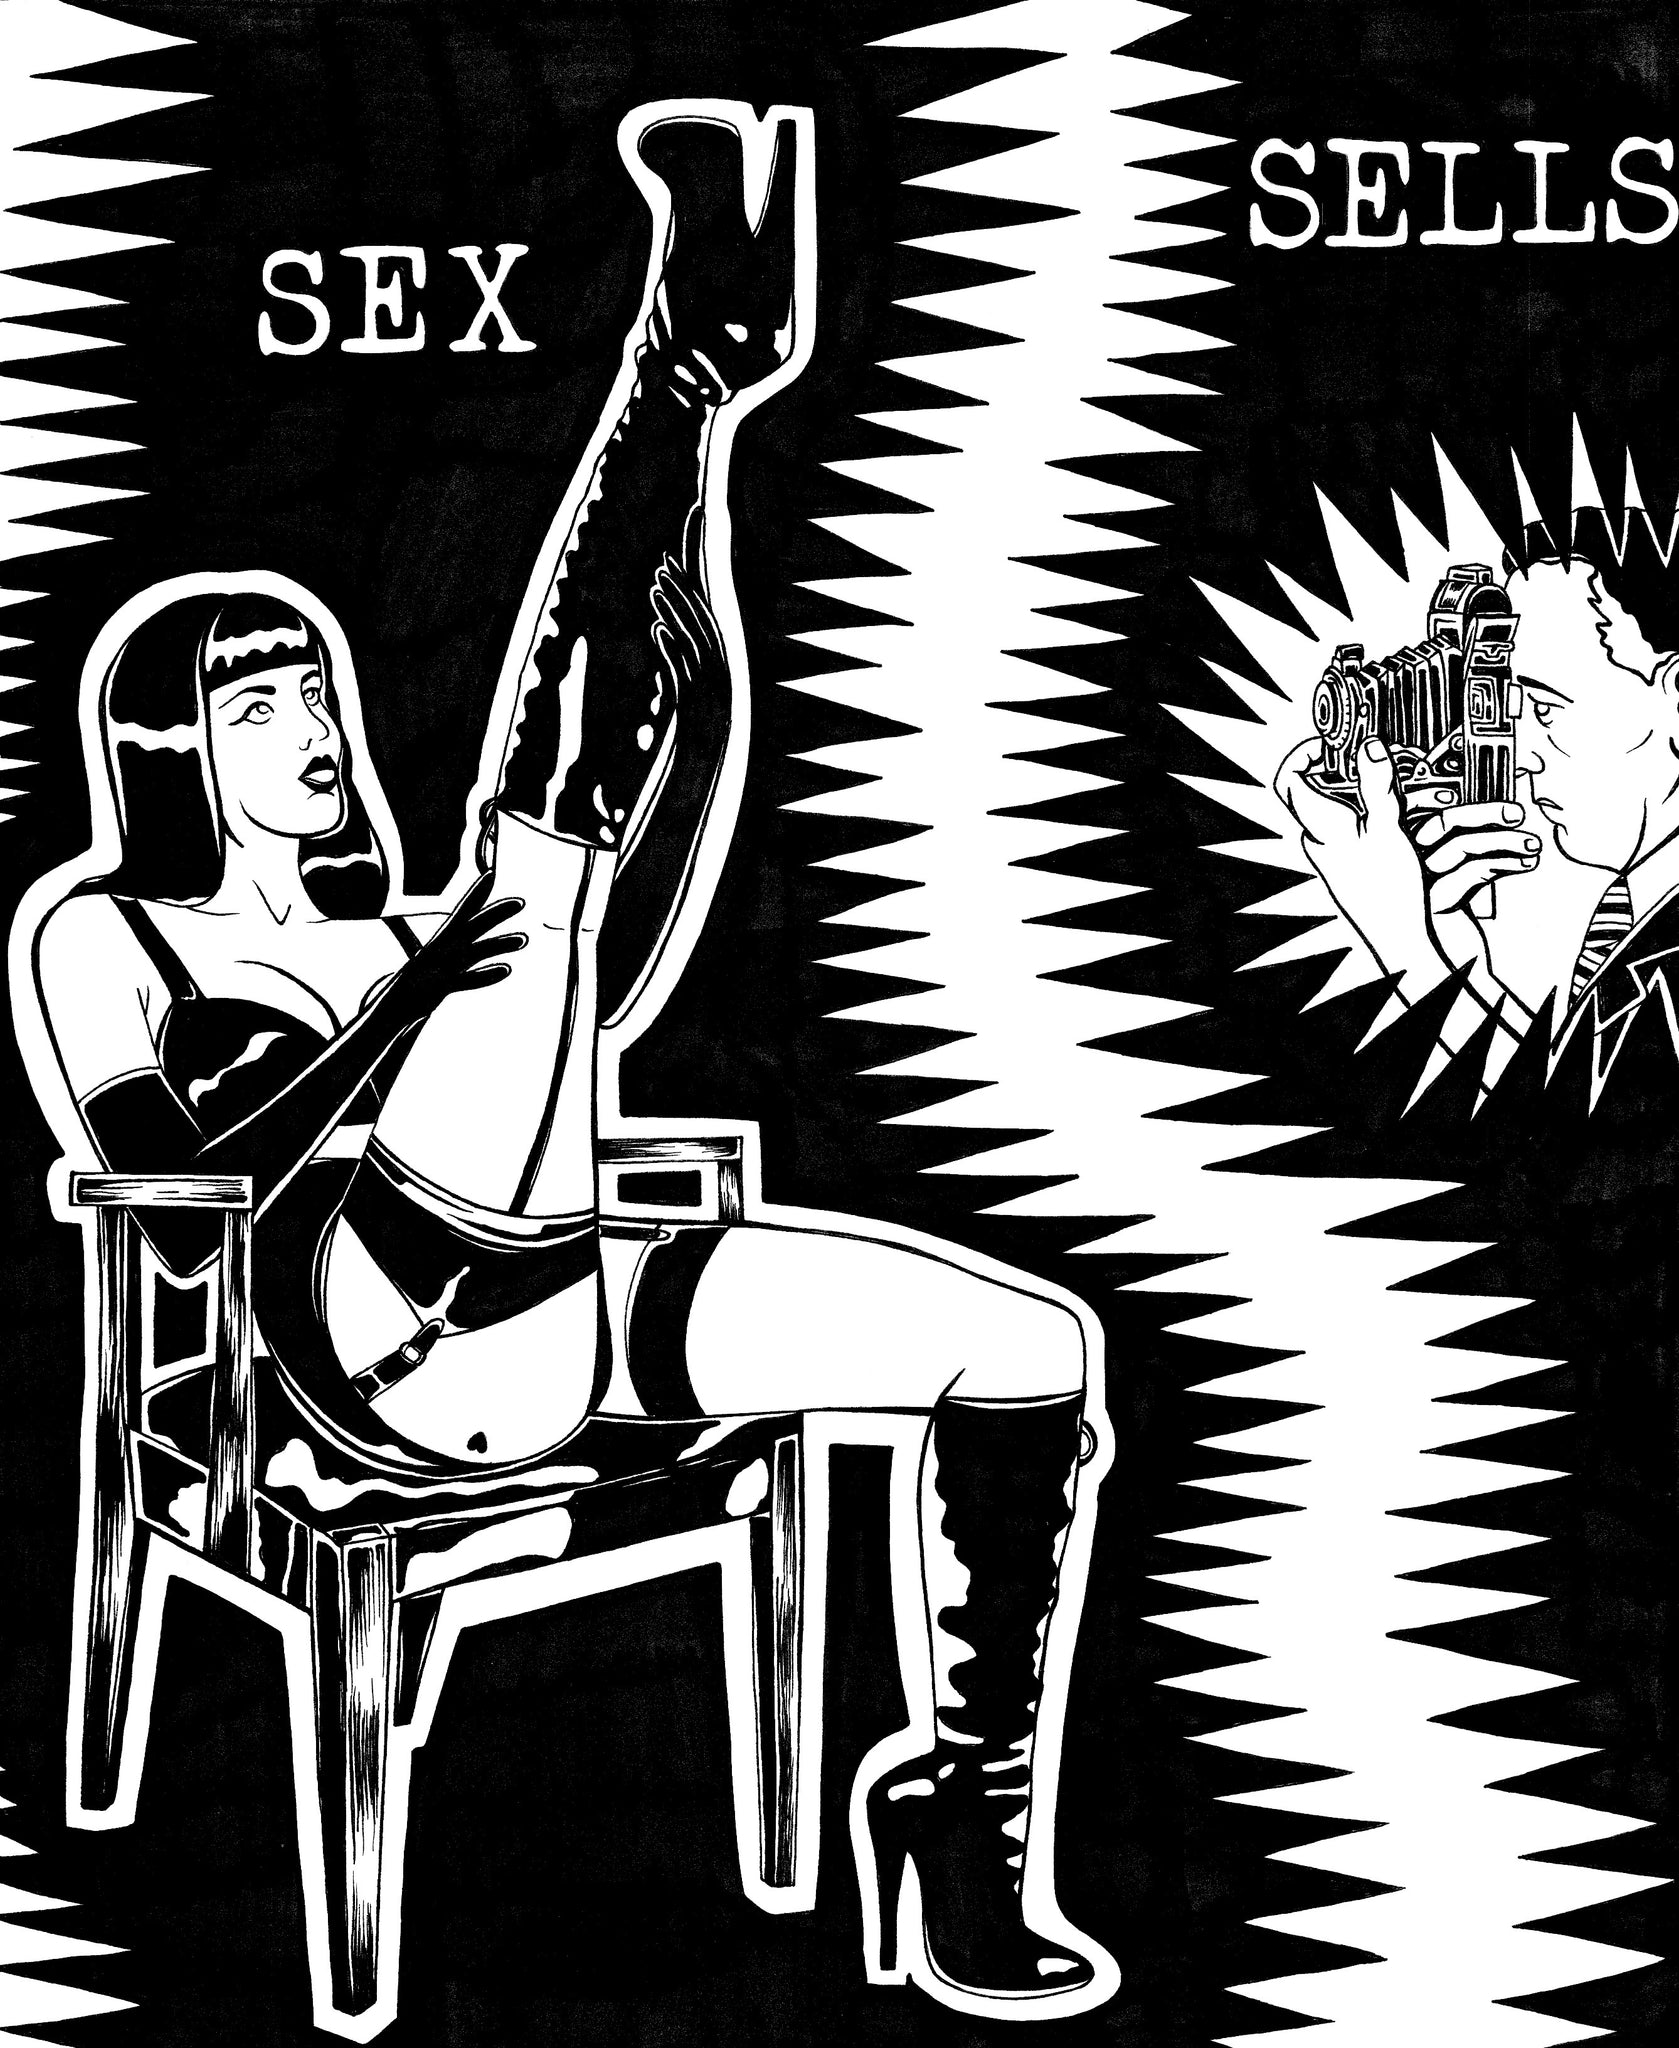 Sex sells!